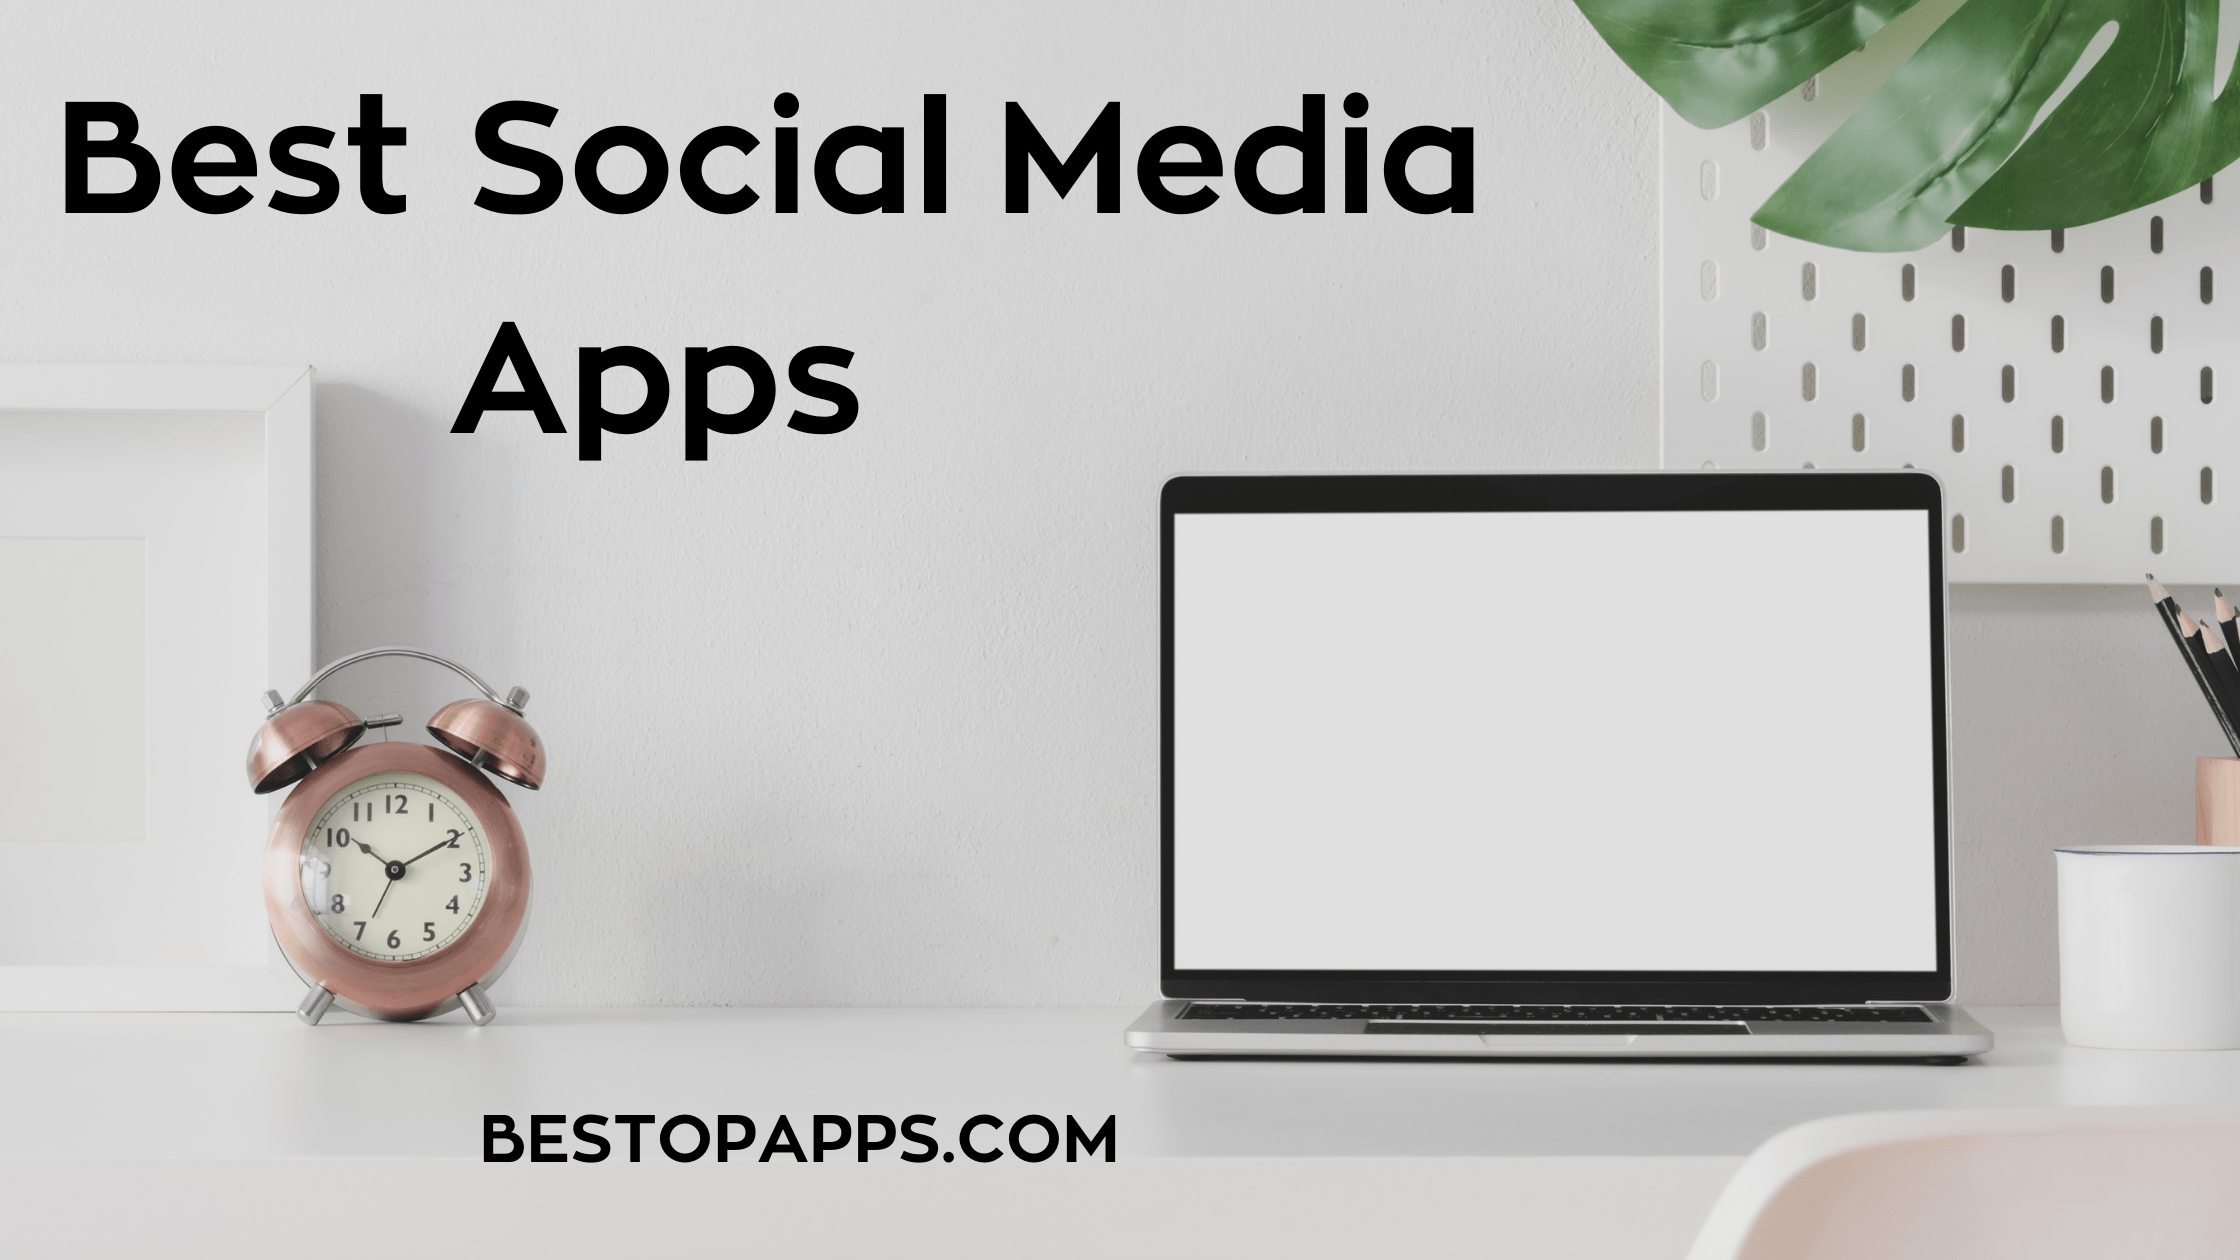 Best Social Media Apps in 2021